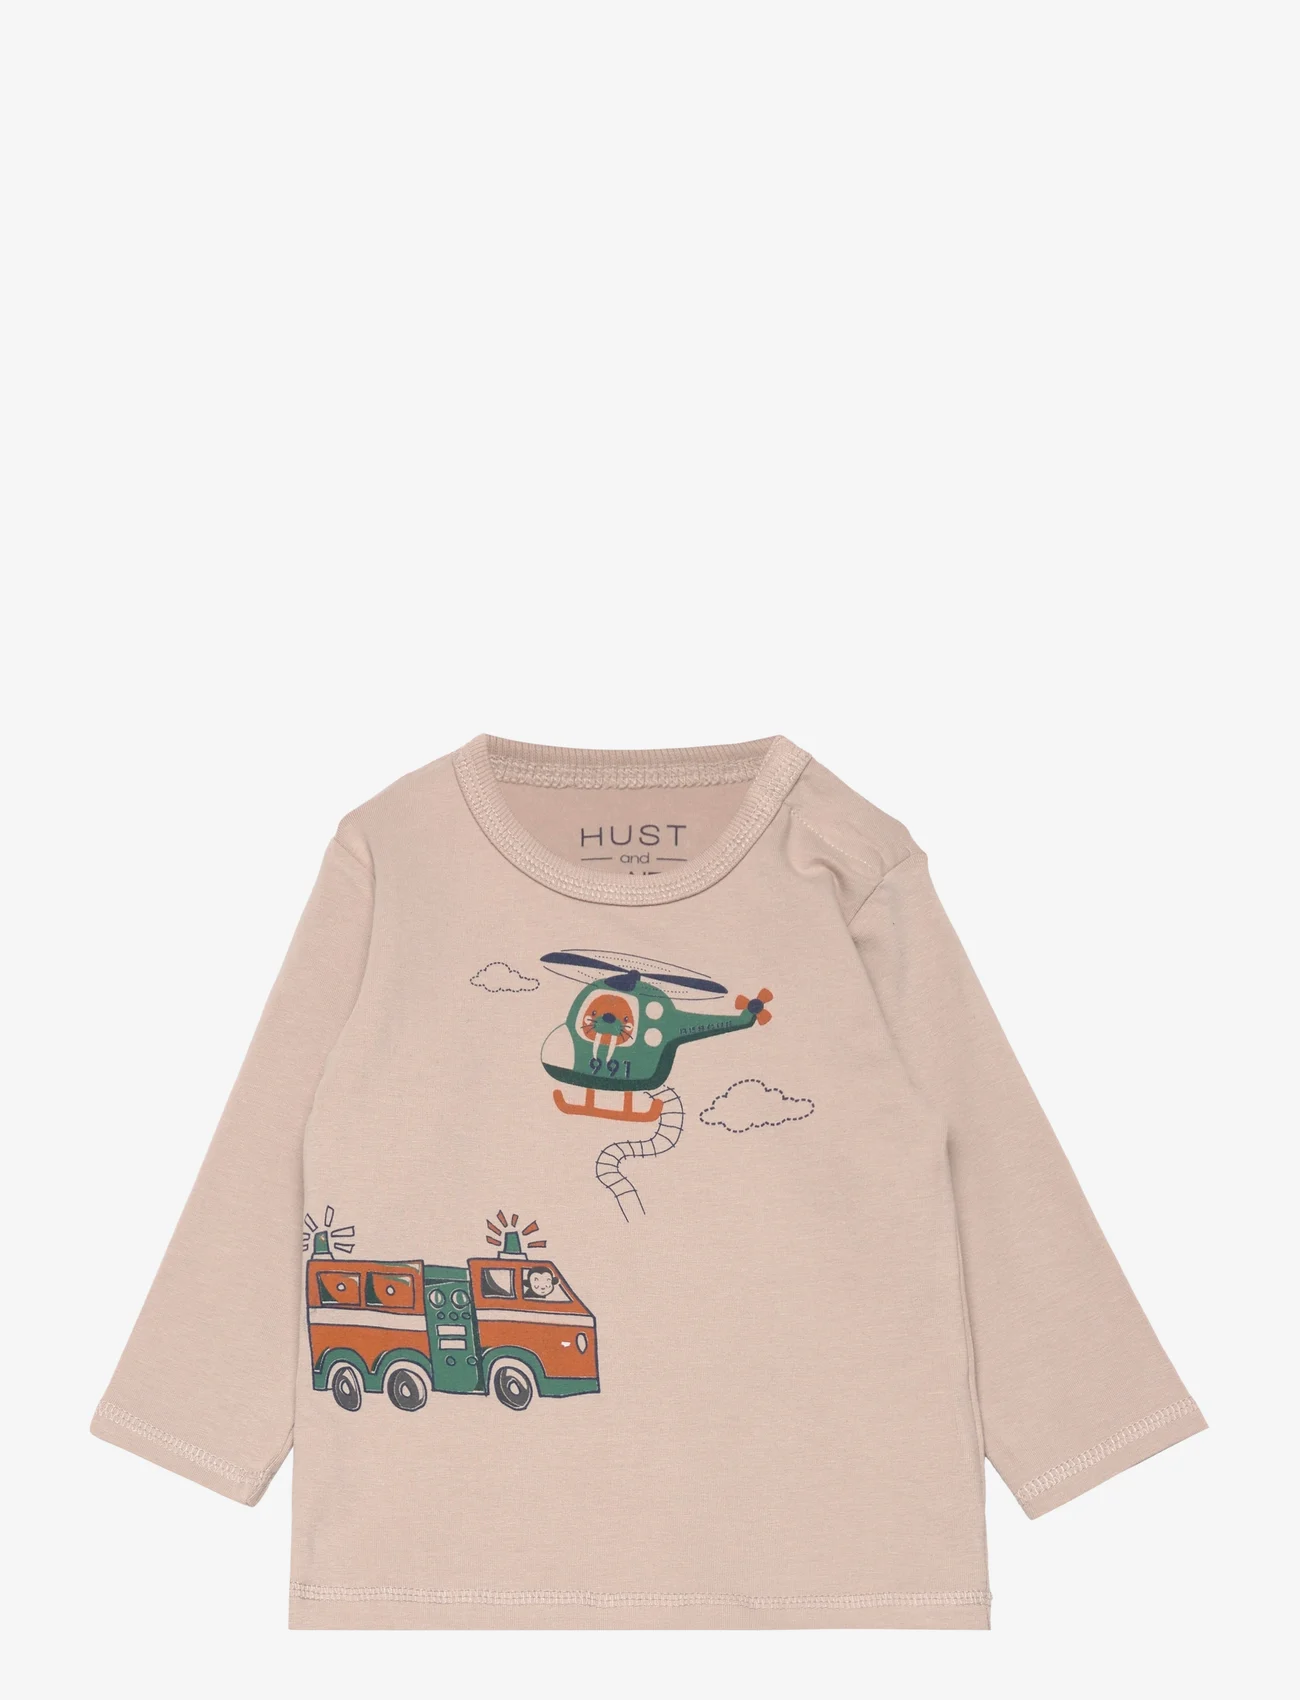 Hust & Claire - August - T-shirt - khaki - 0